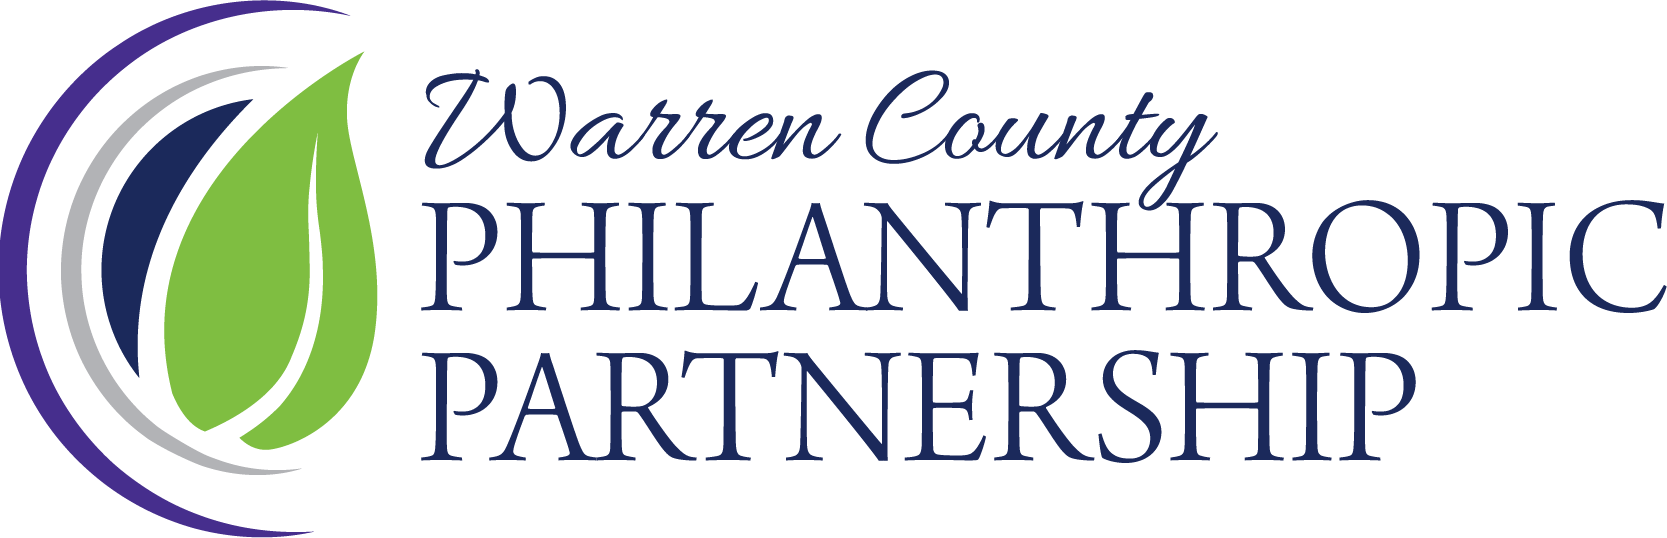 Warren County Philanthropic Partnership logo